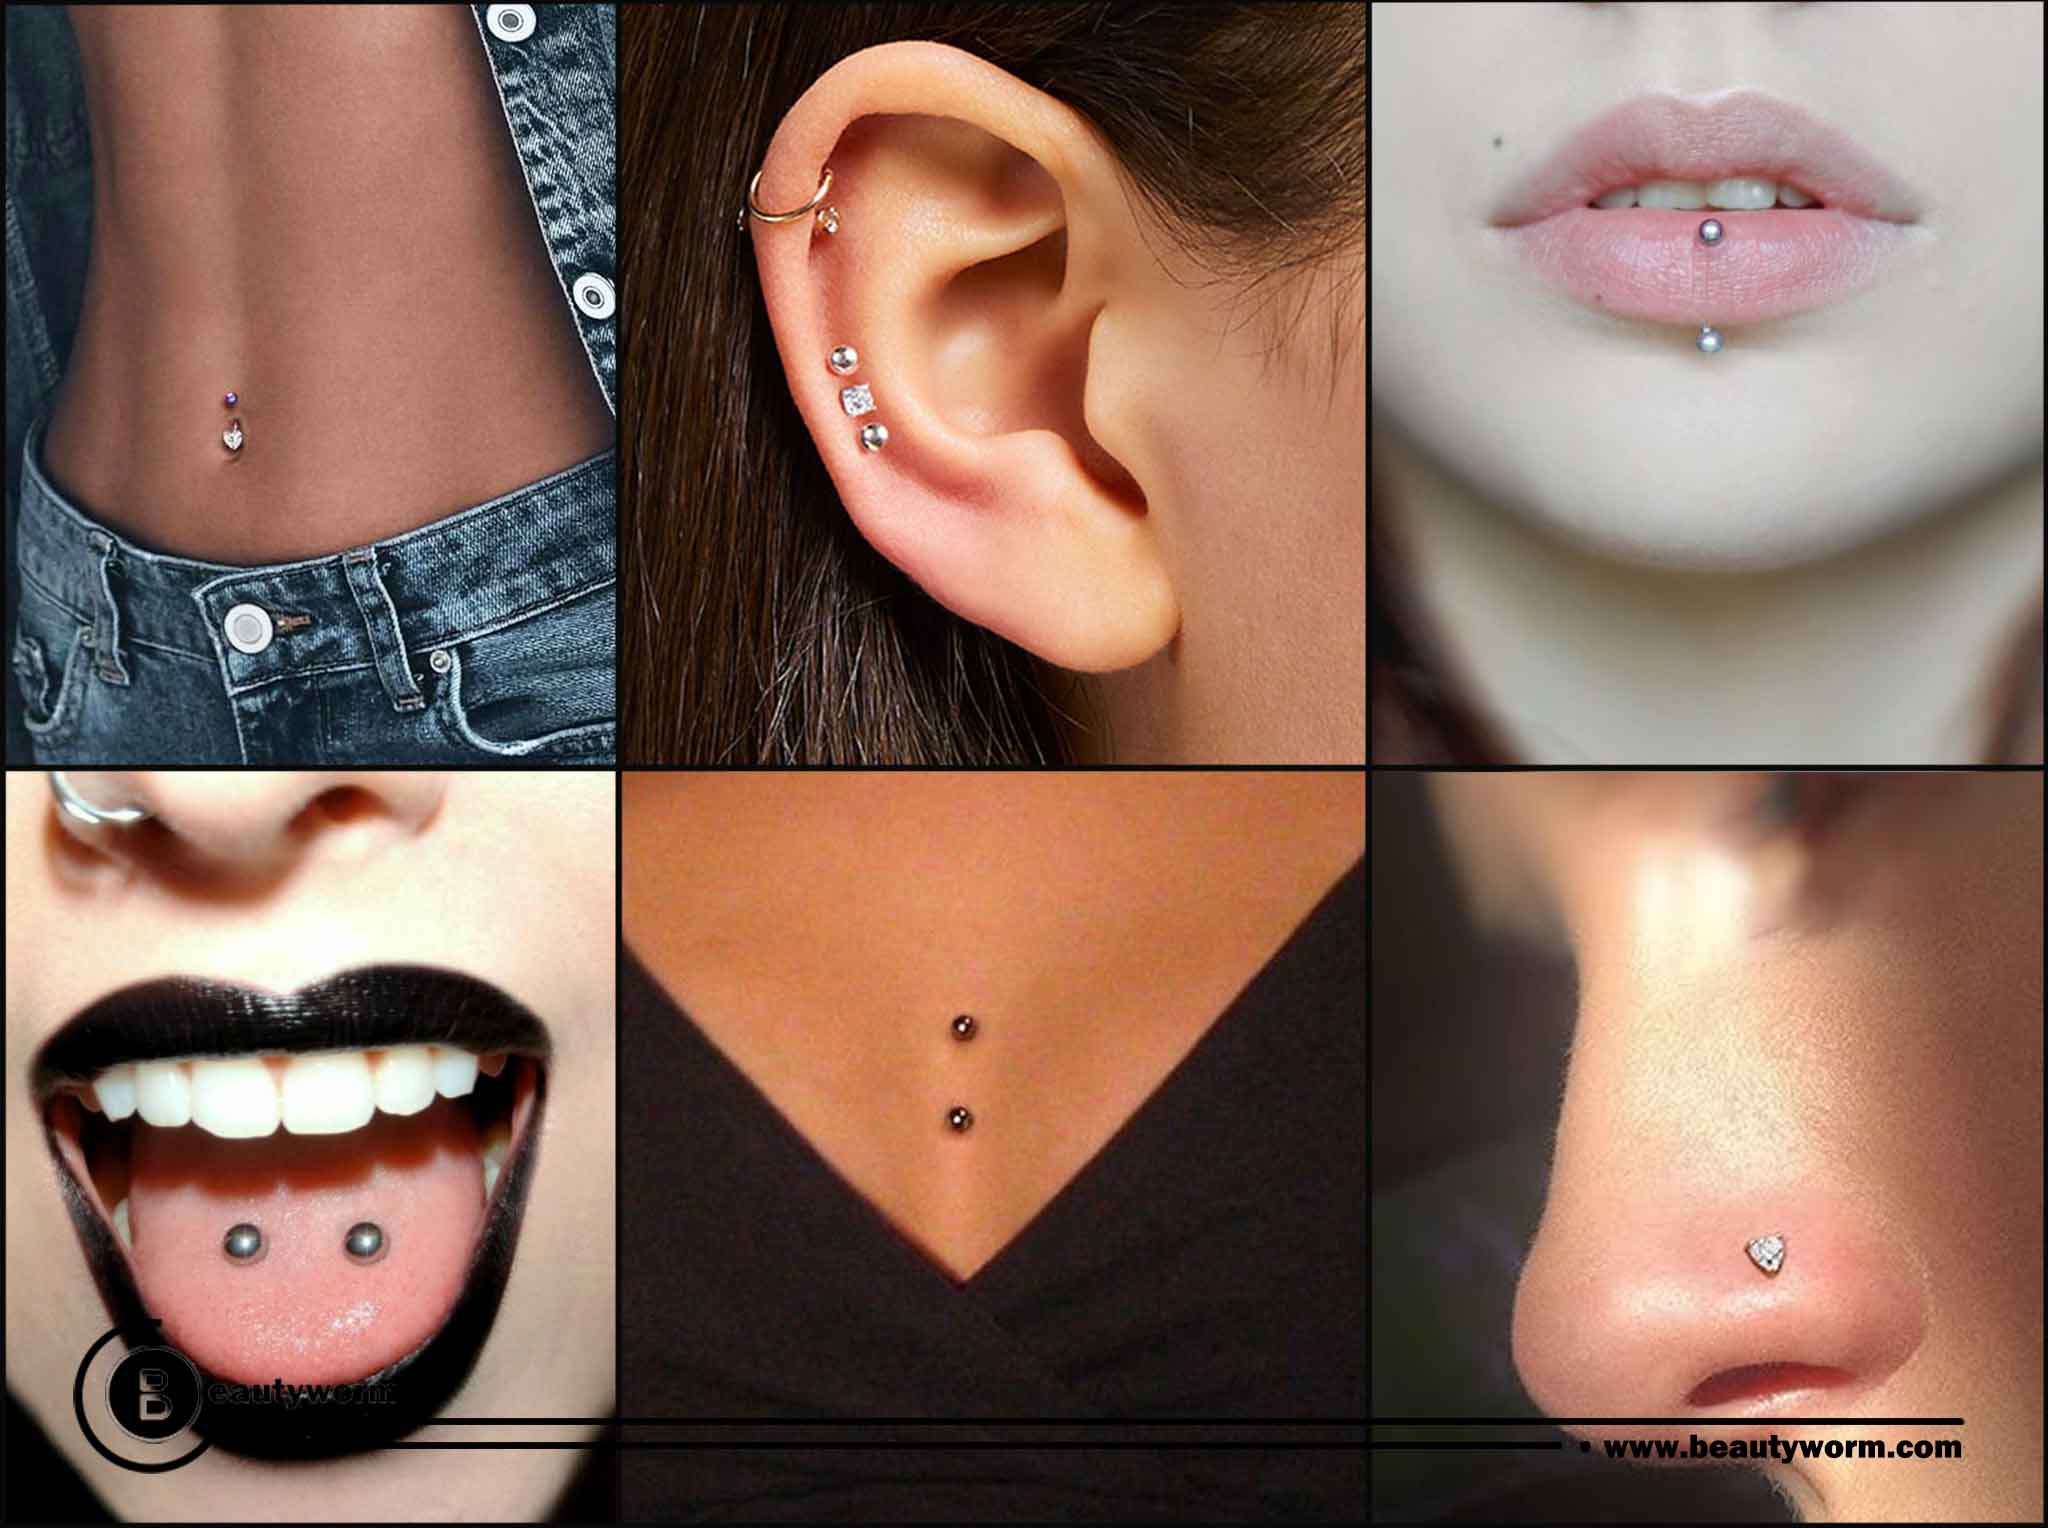 What kind of piercing should I get?